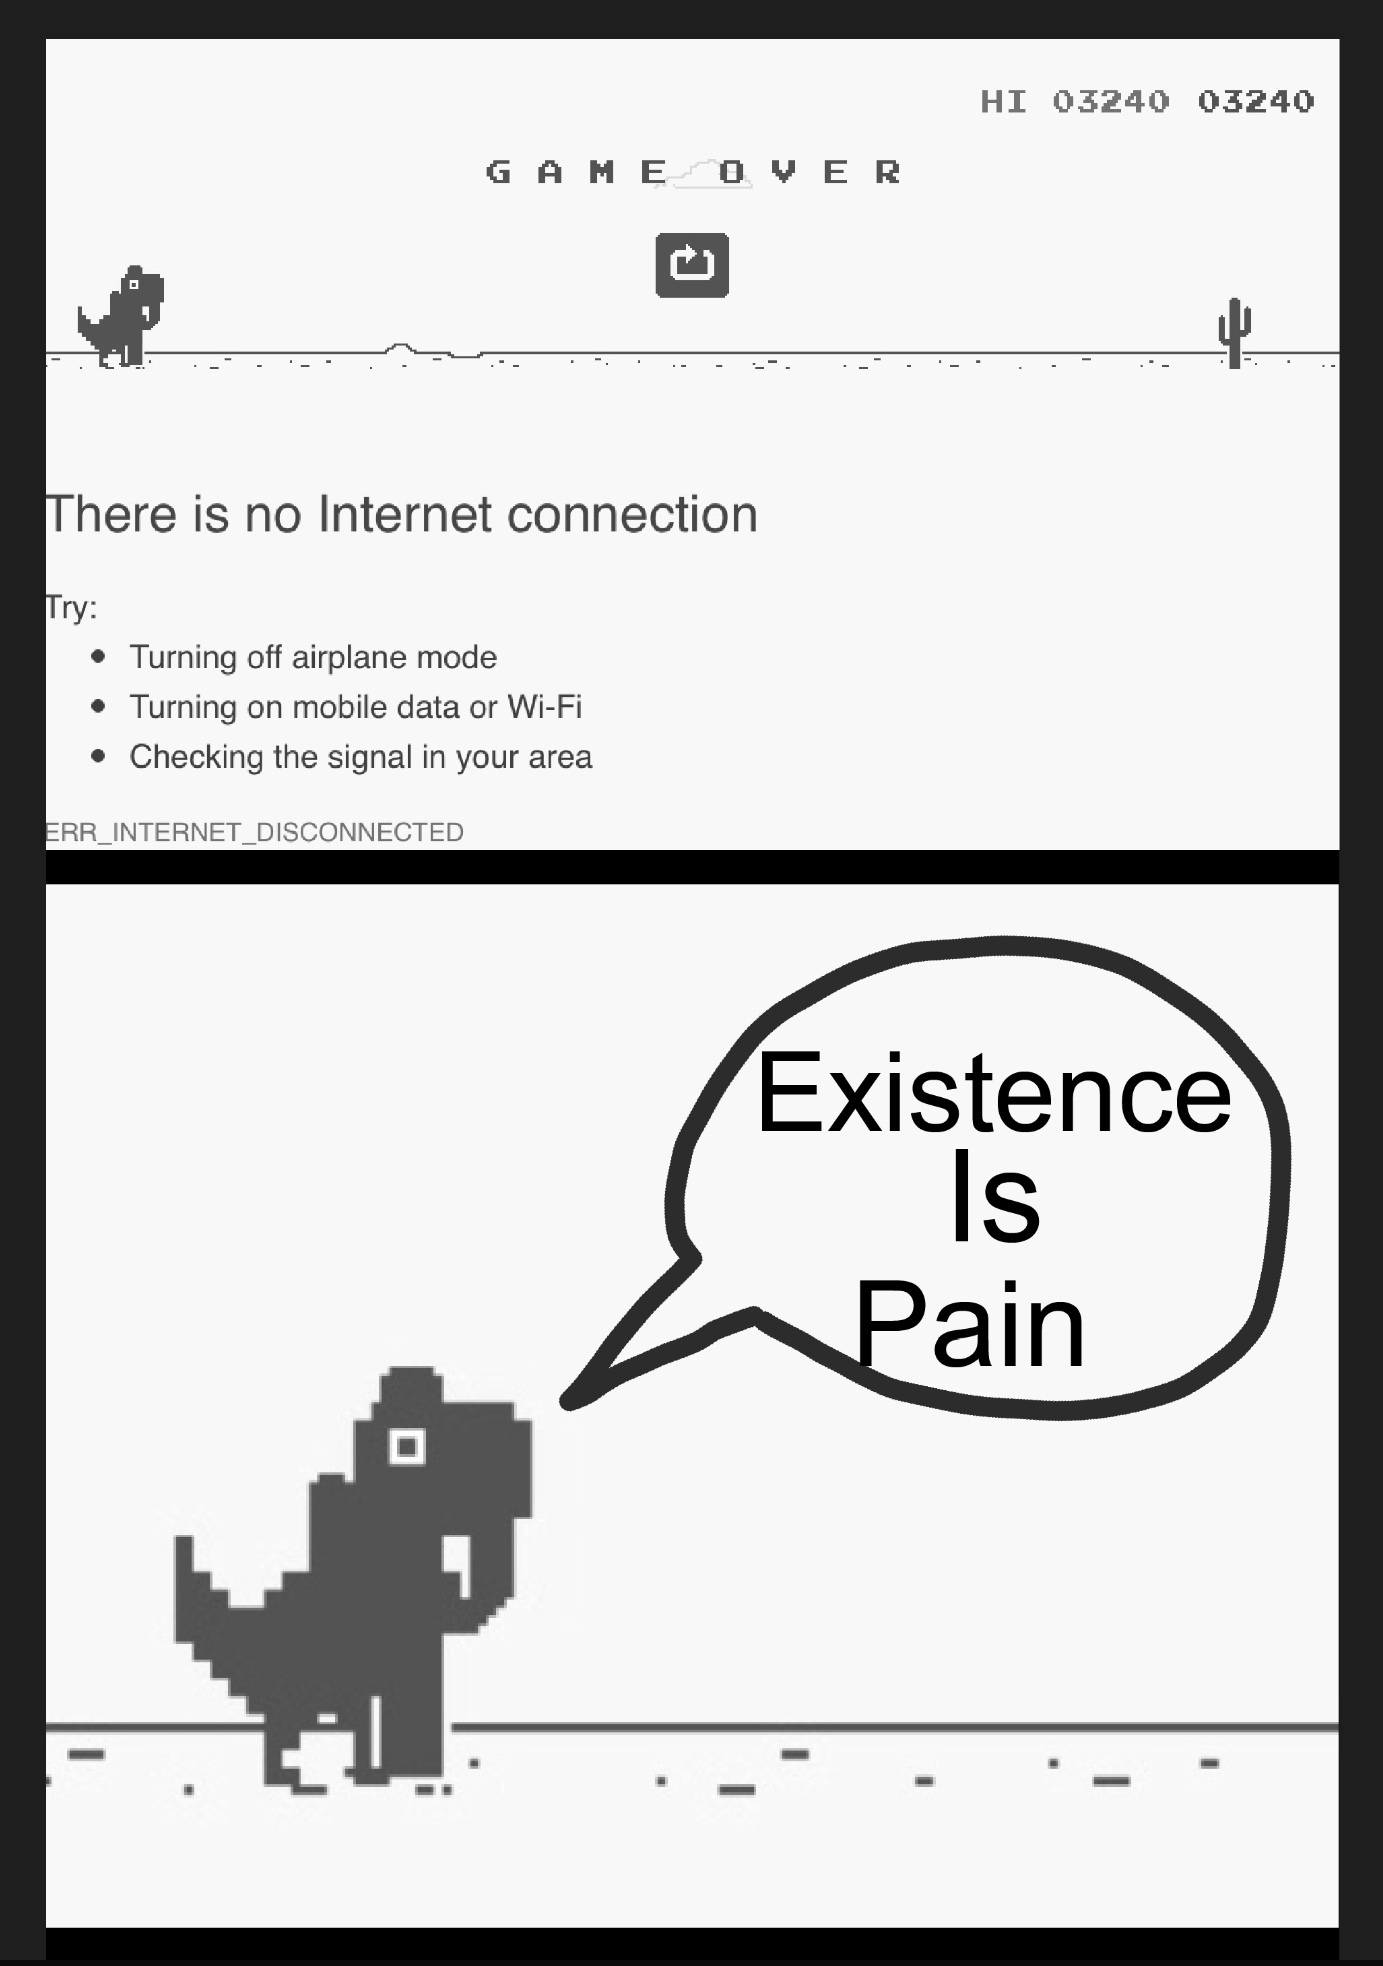 Existence is Pain! - meme